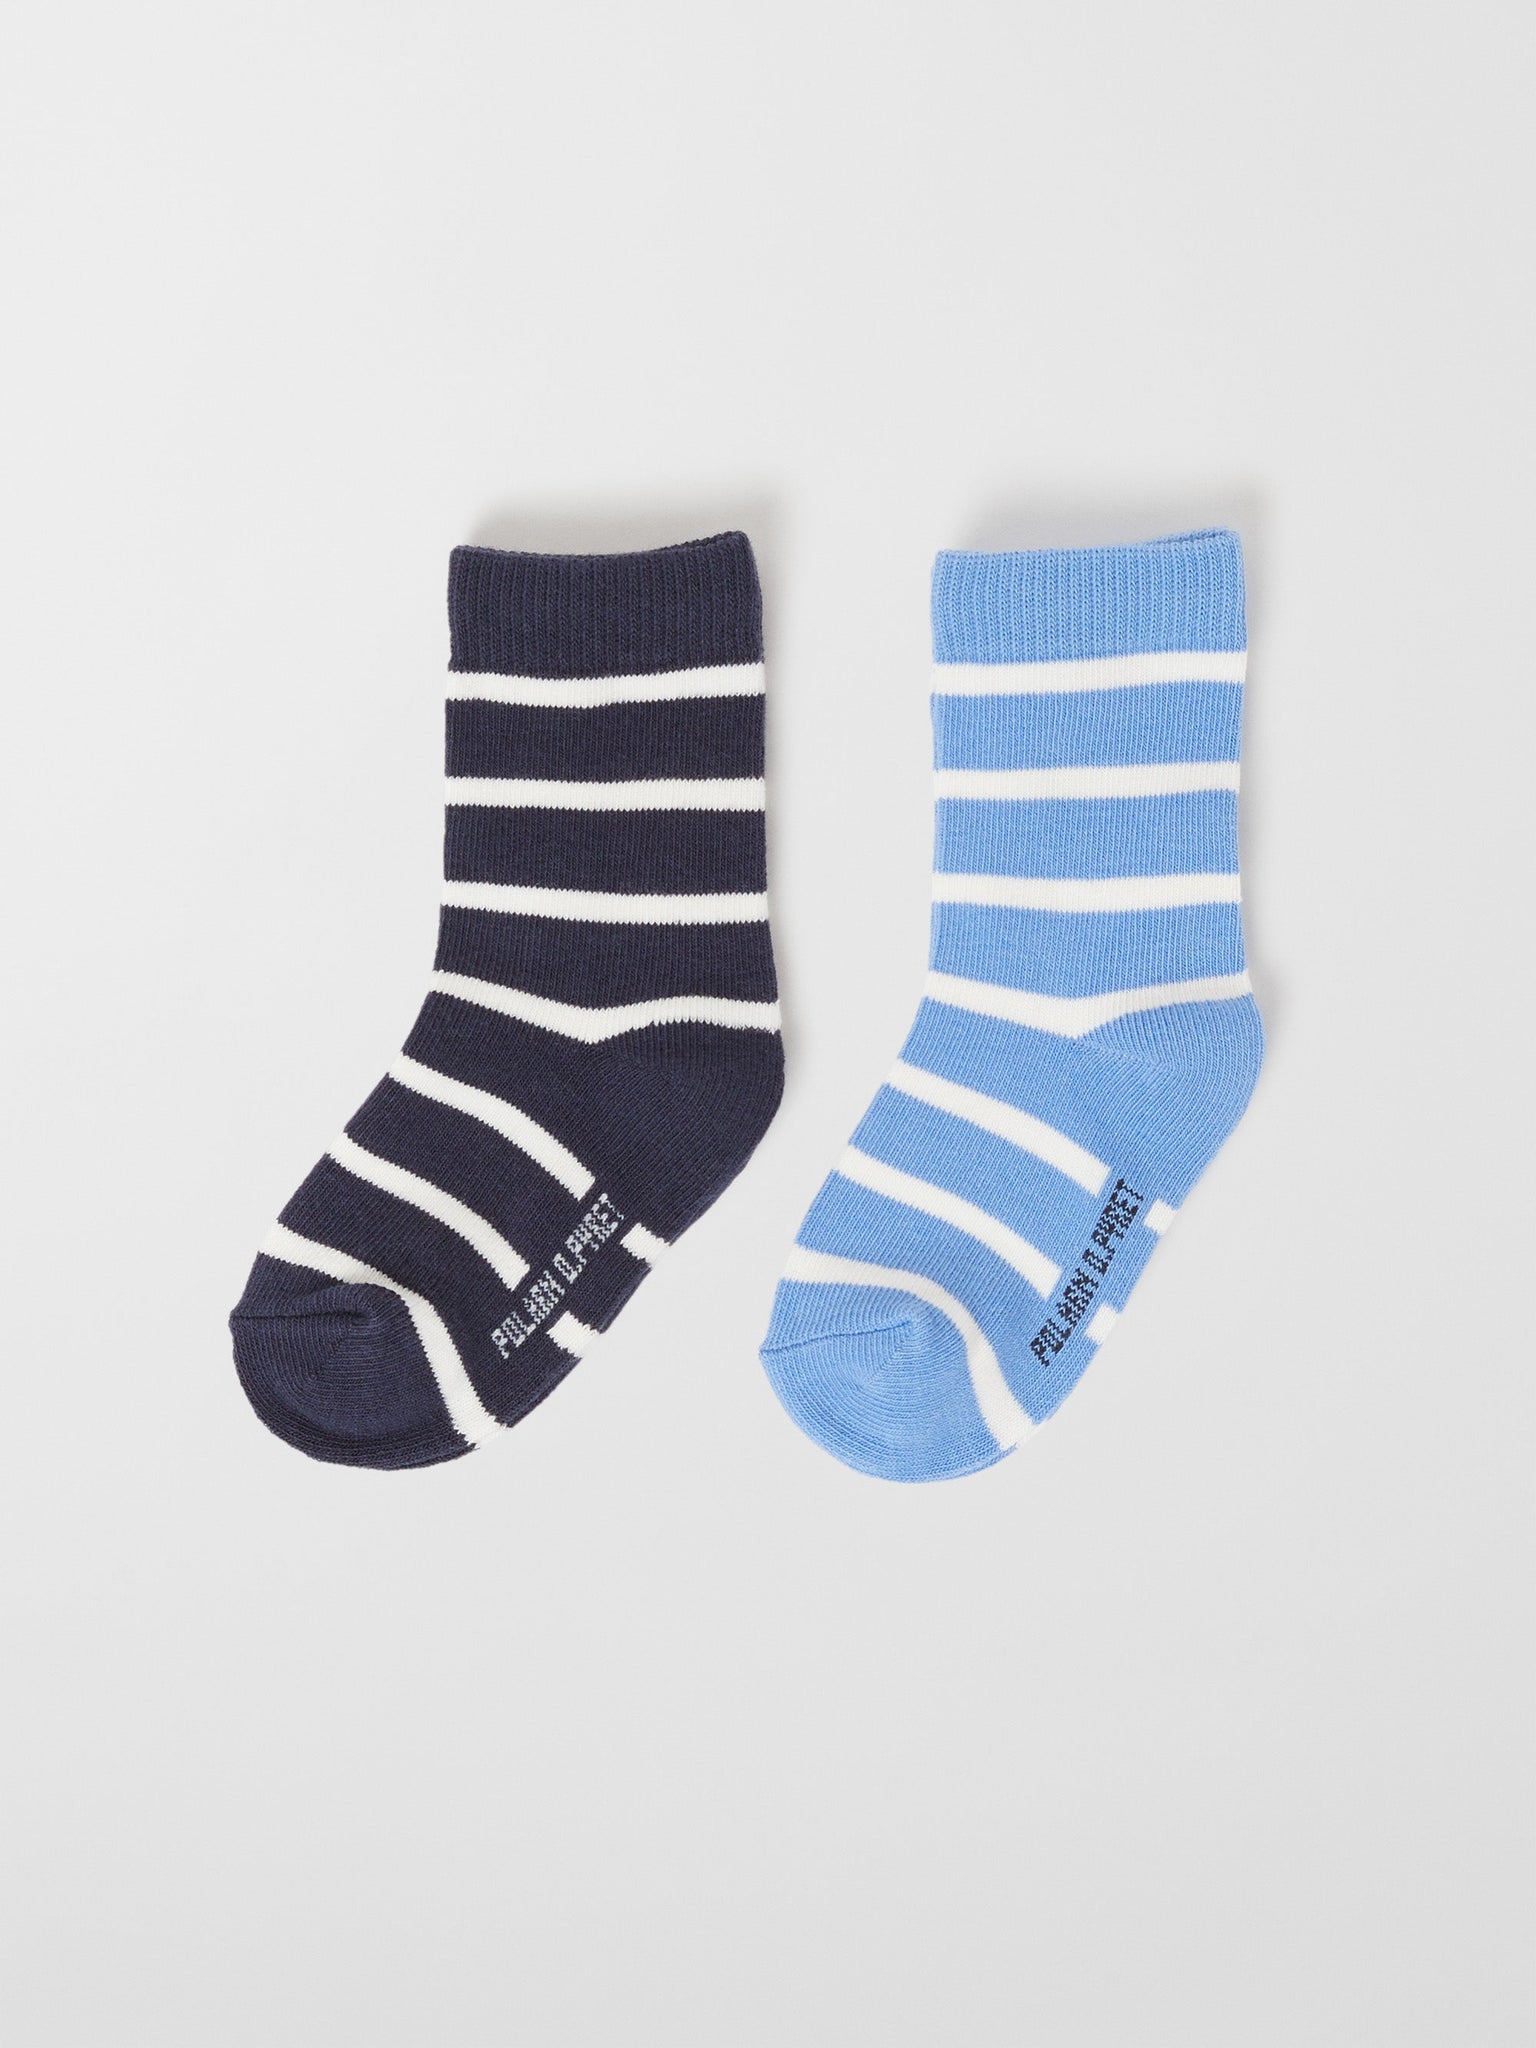 Blue Striped Kids Socks Multipack | Polarn O. Pyret Ireland